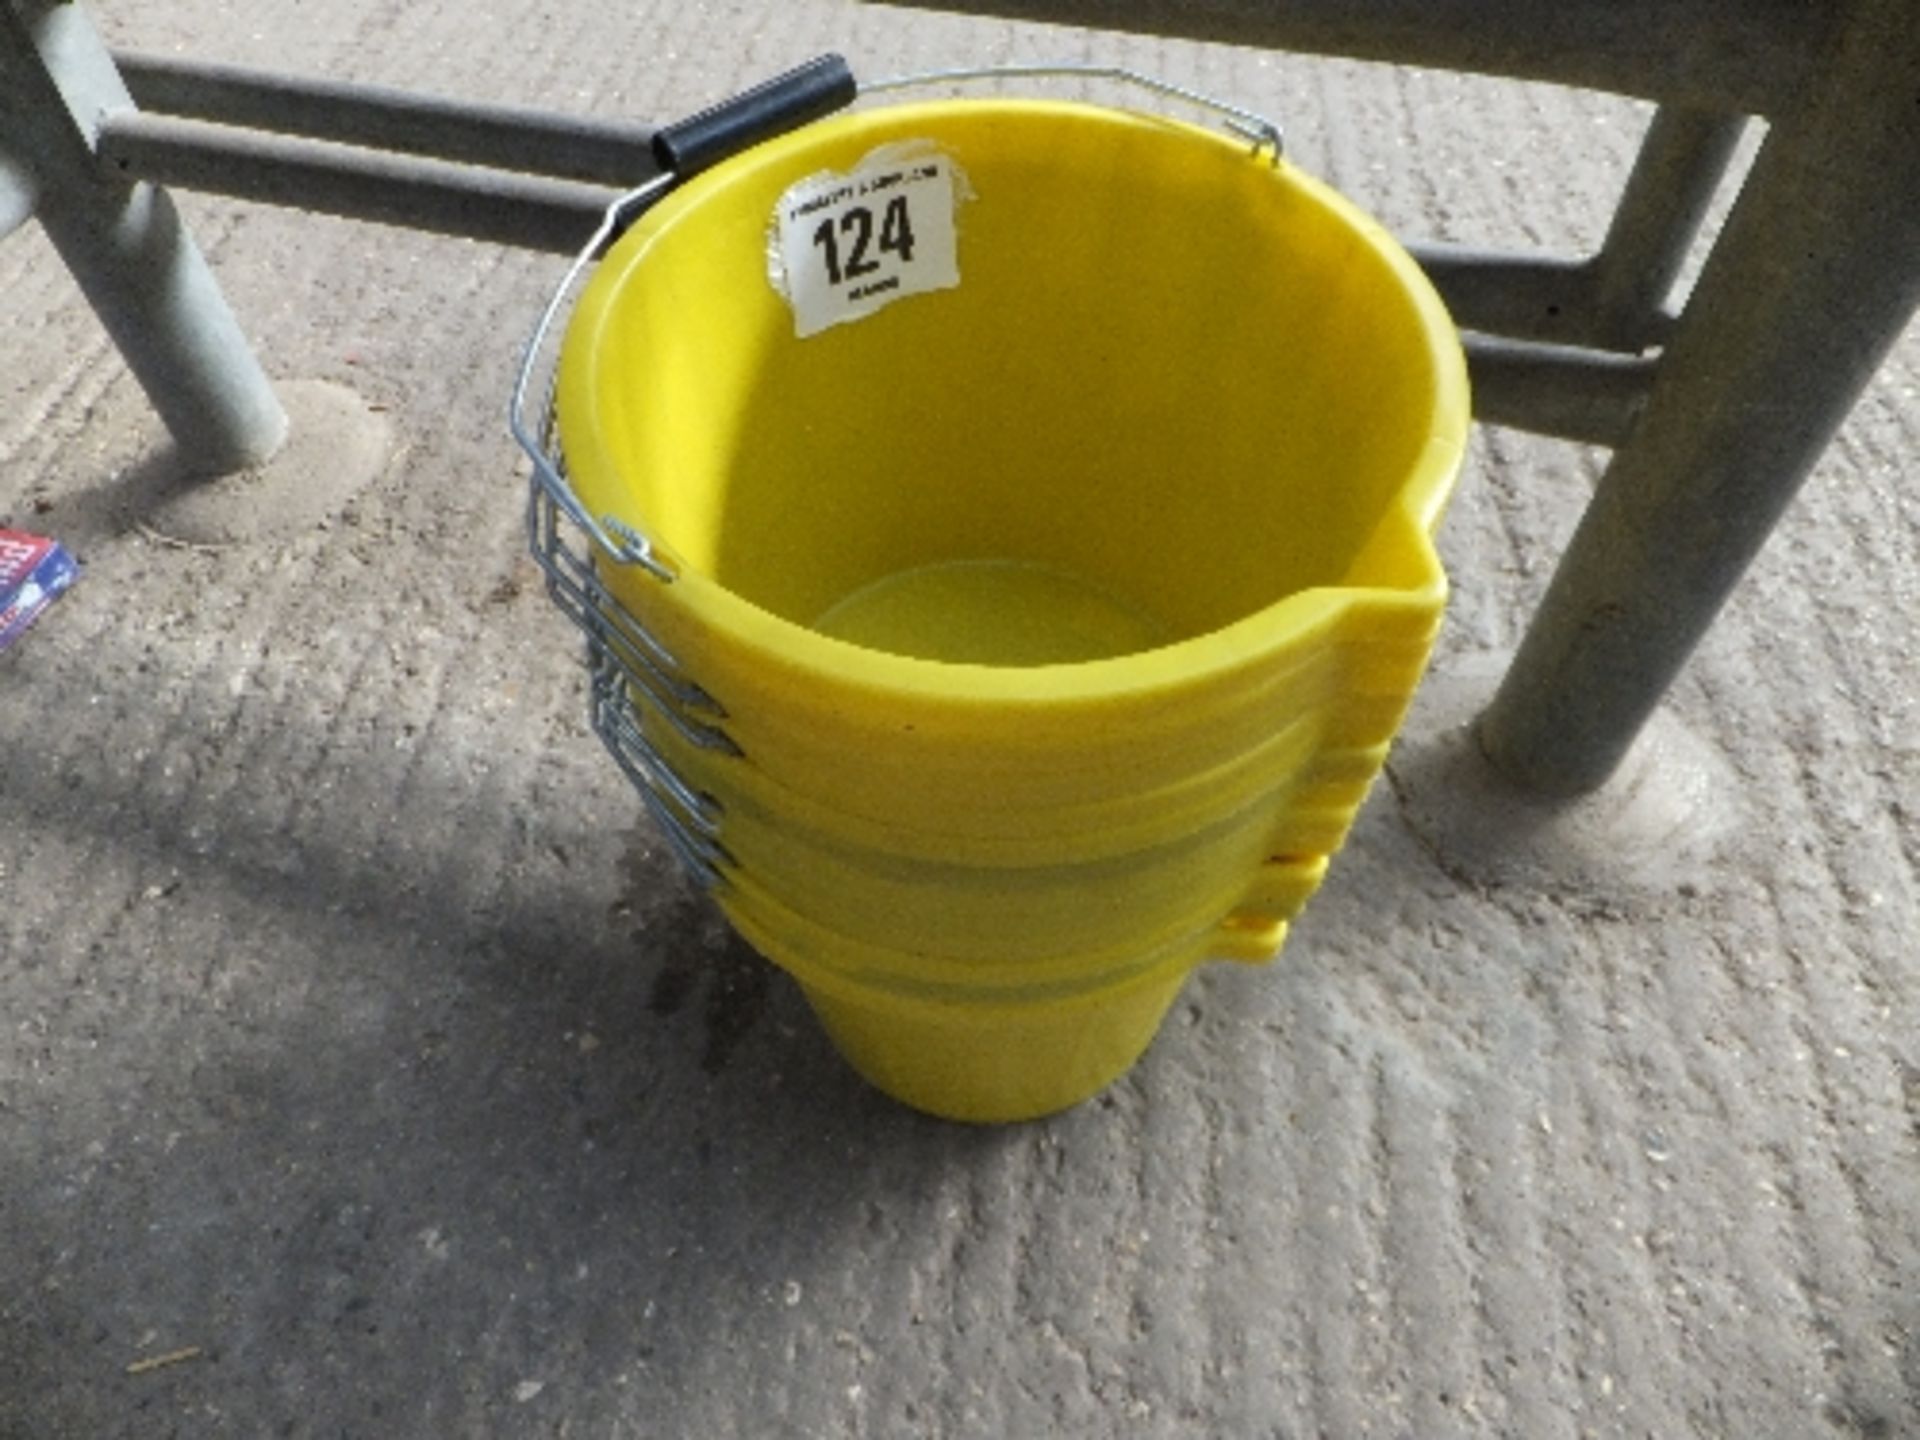 12 yellow buckets